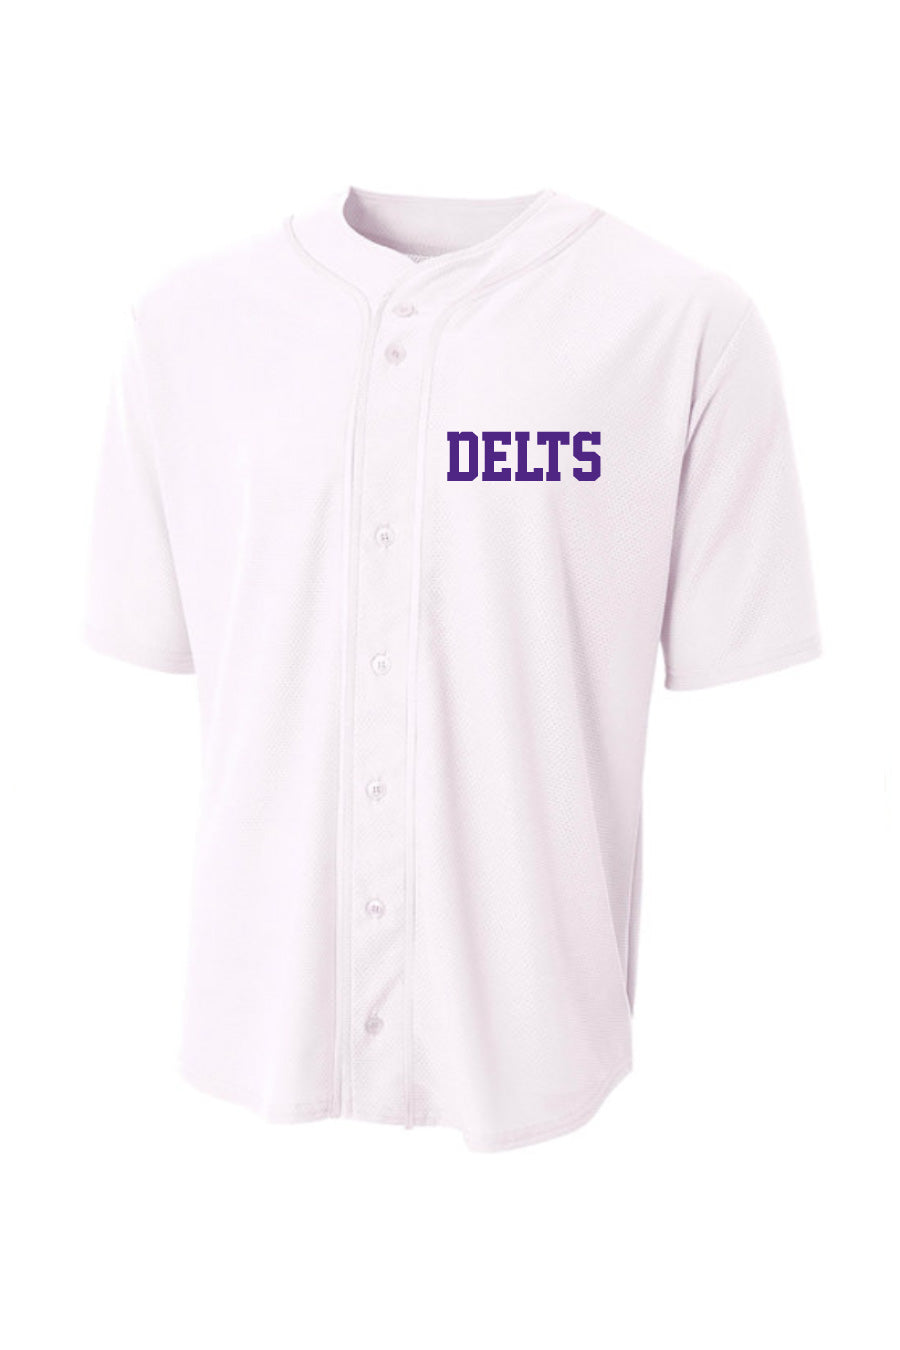 Delts White Baseball Jersey – The Delt Store